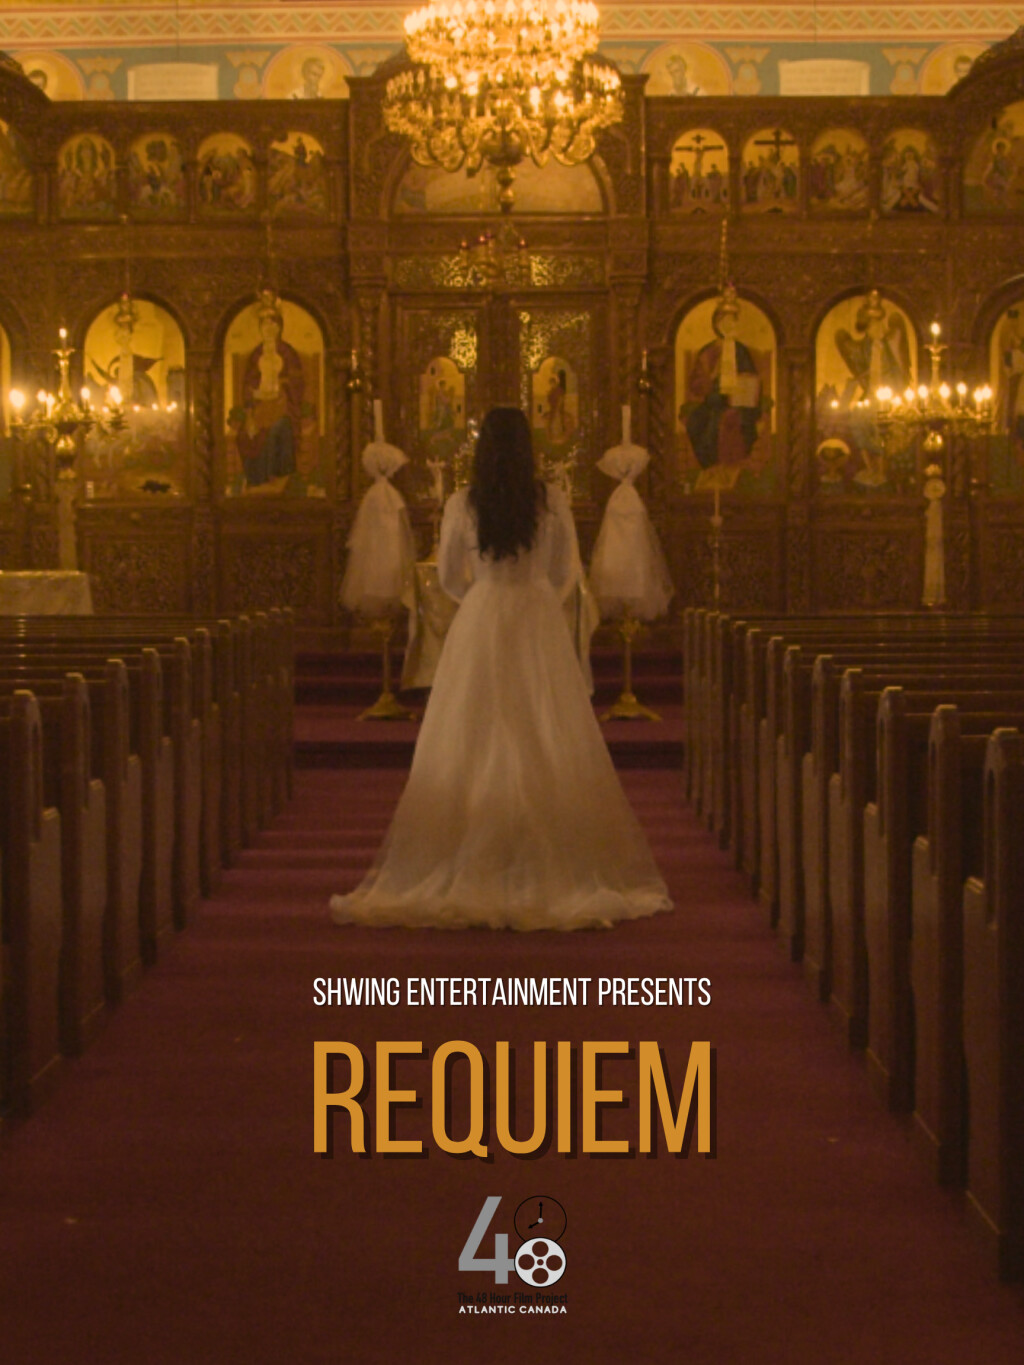 Filmposter for Requiem 